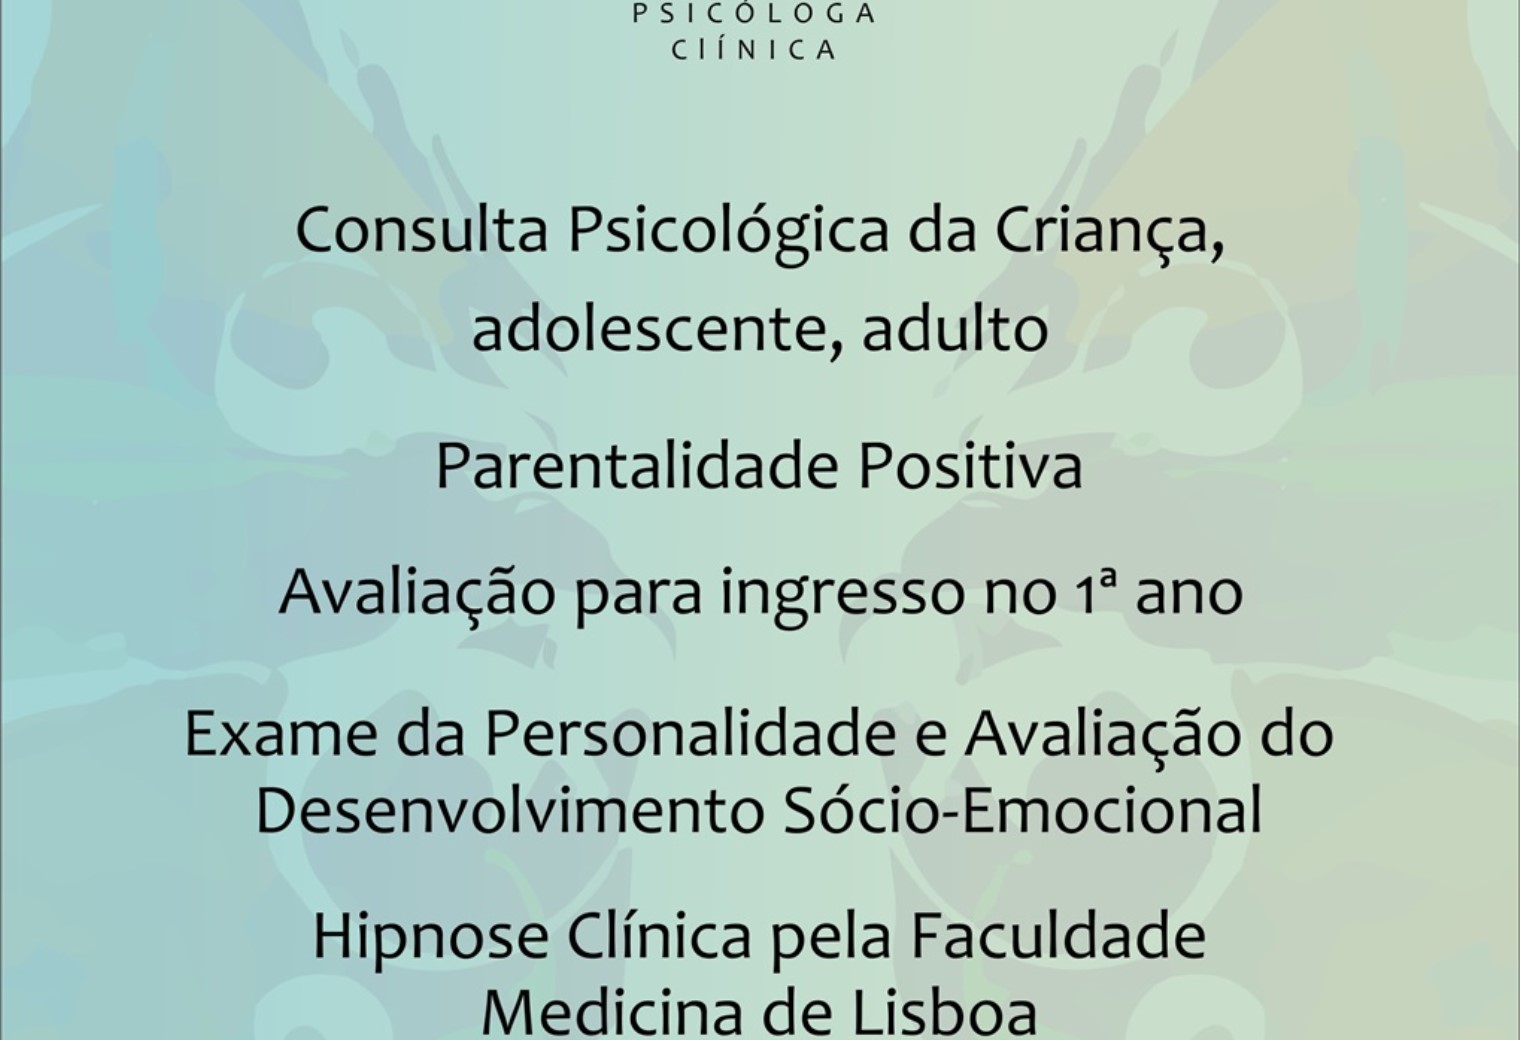 Consultas de Psicologia Clinica